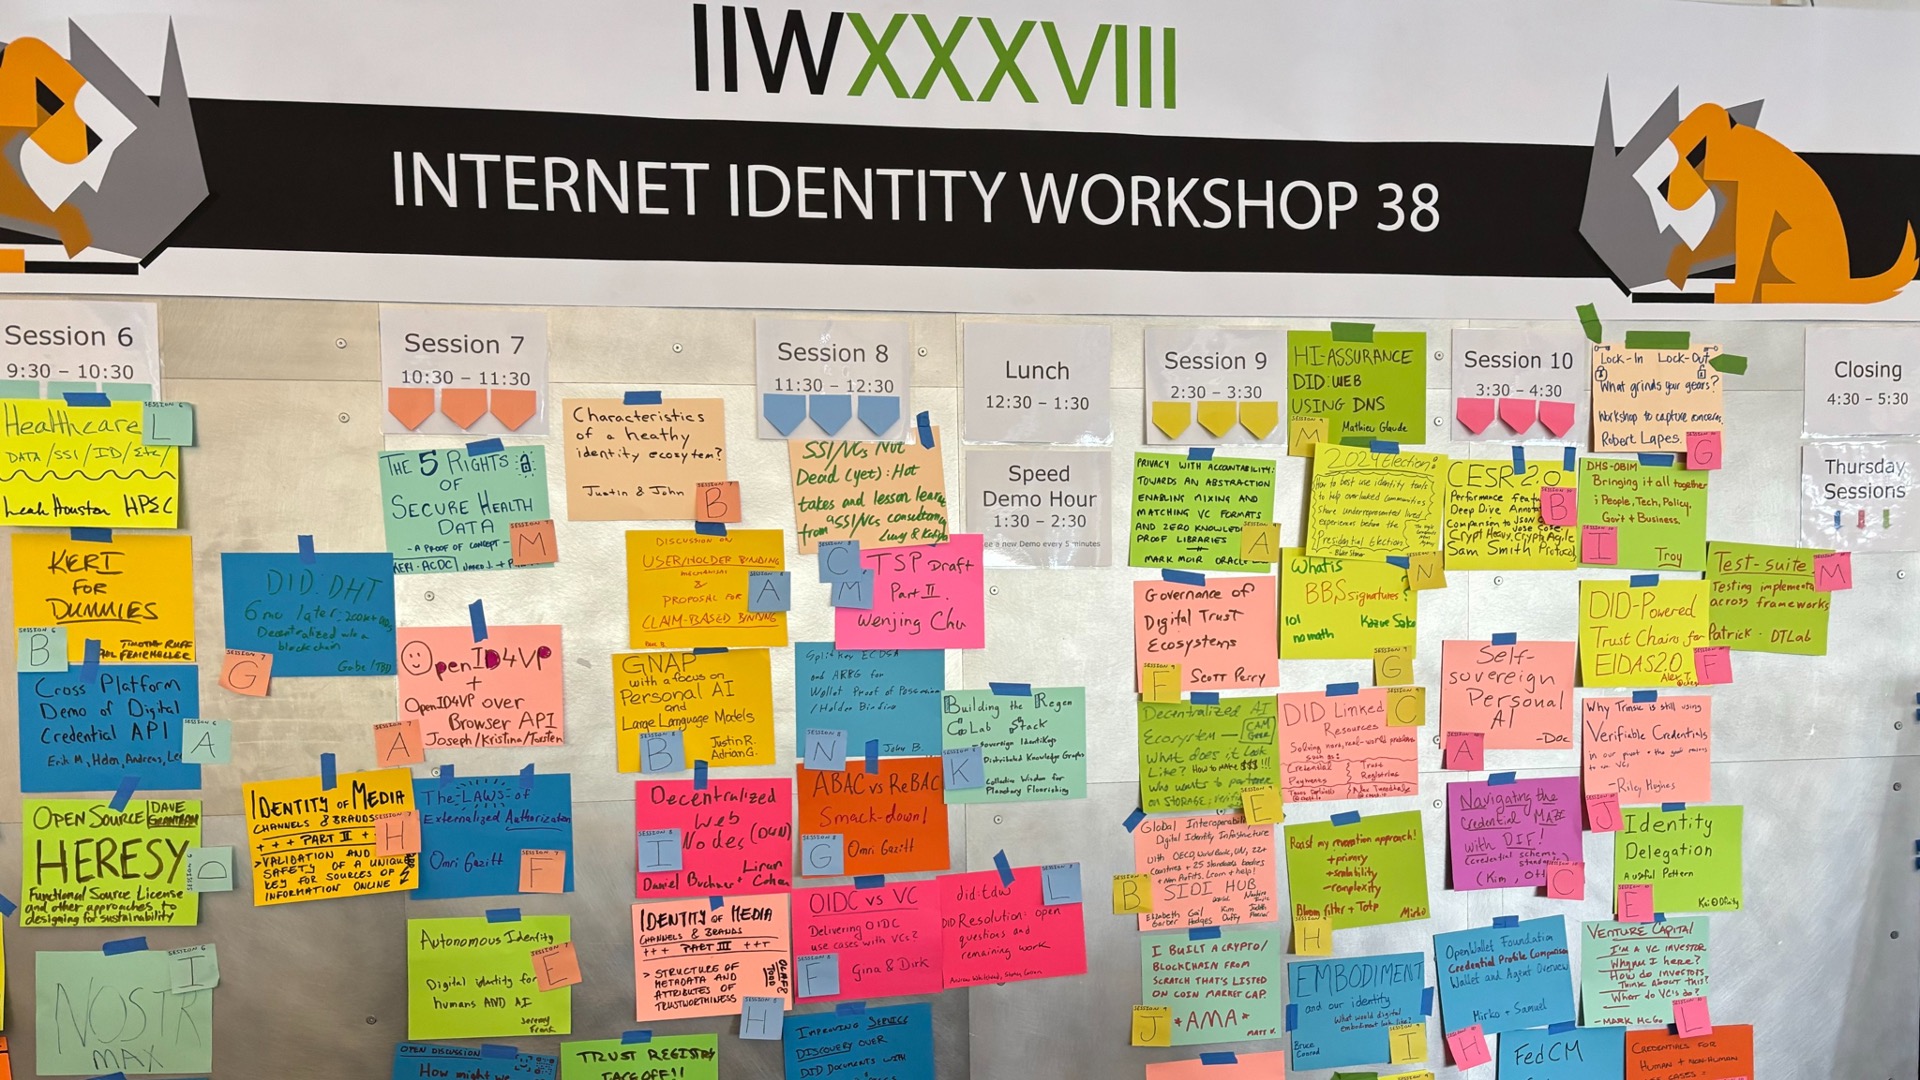 A Summary of Internet Identity Workshop #38